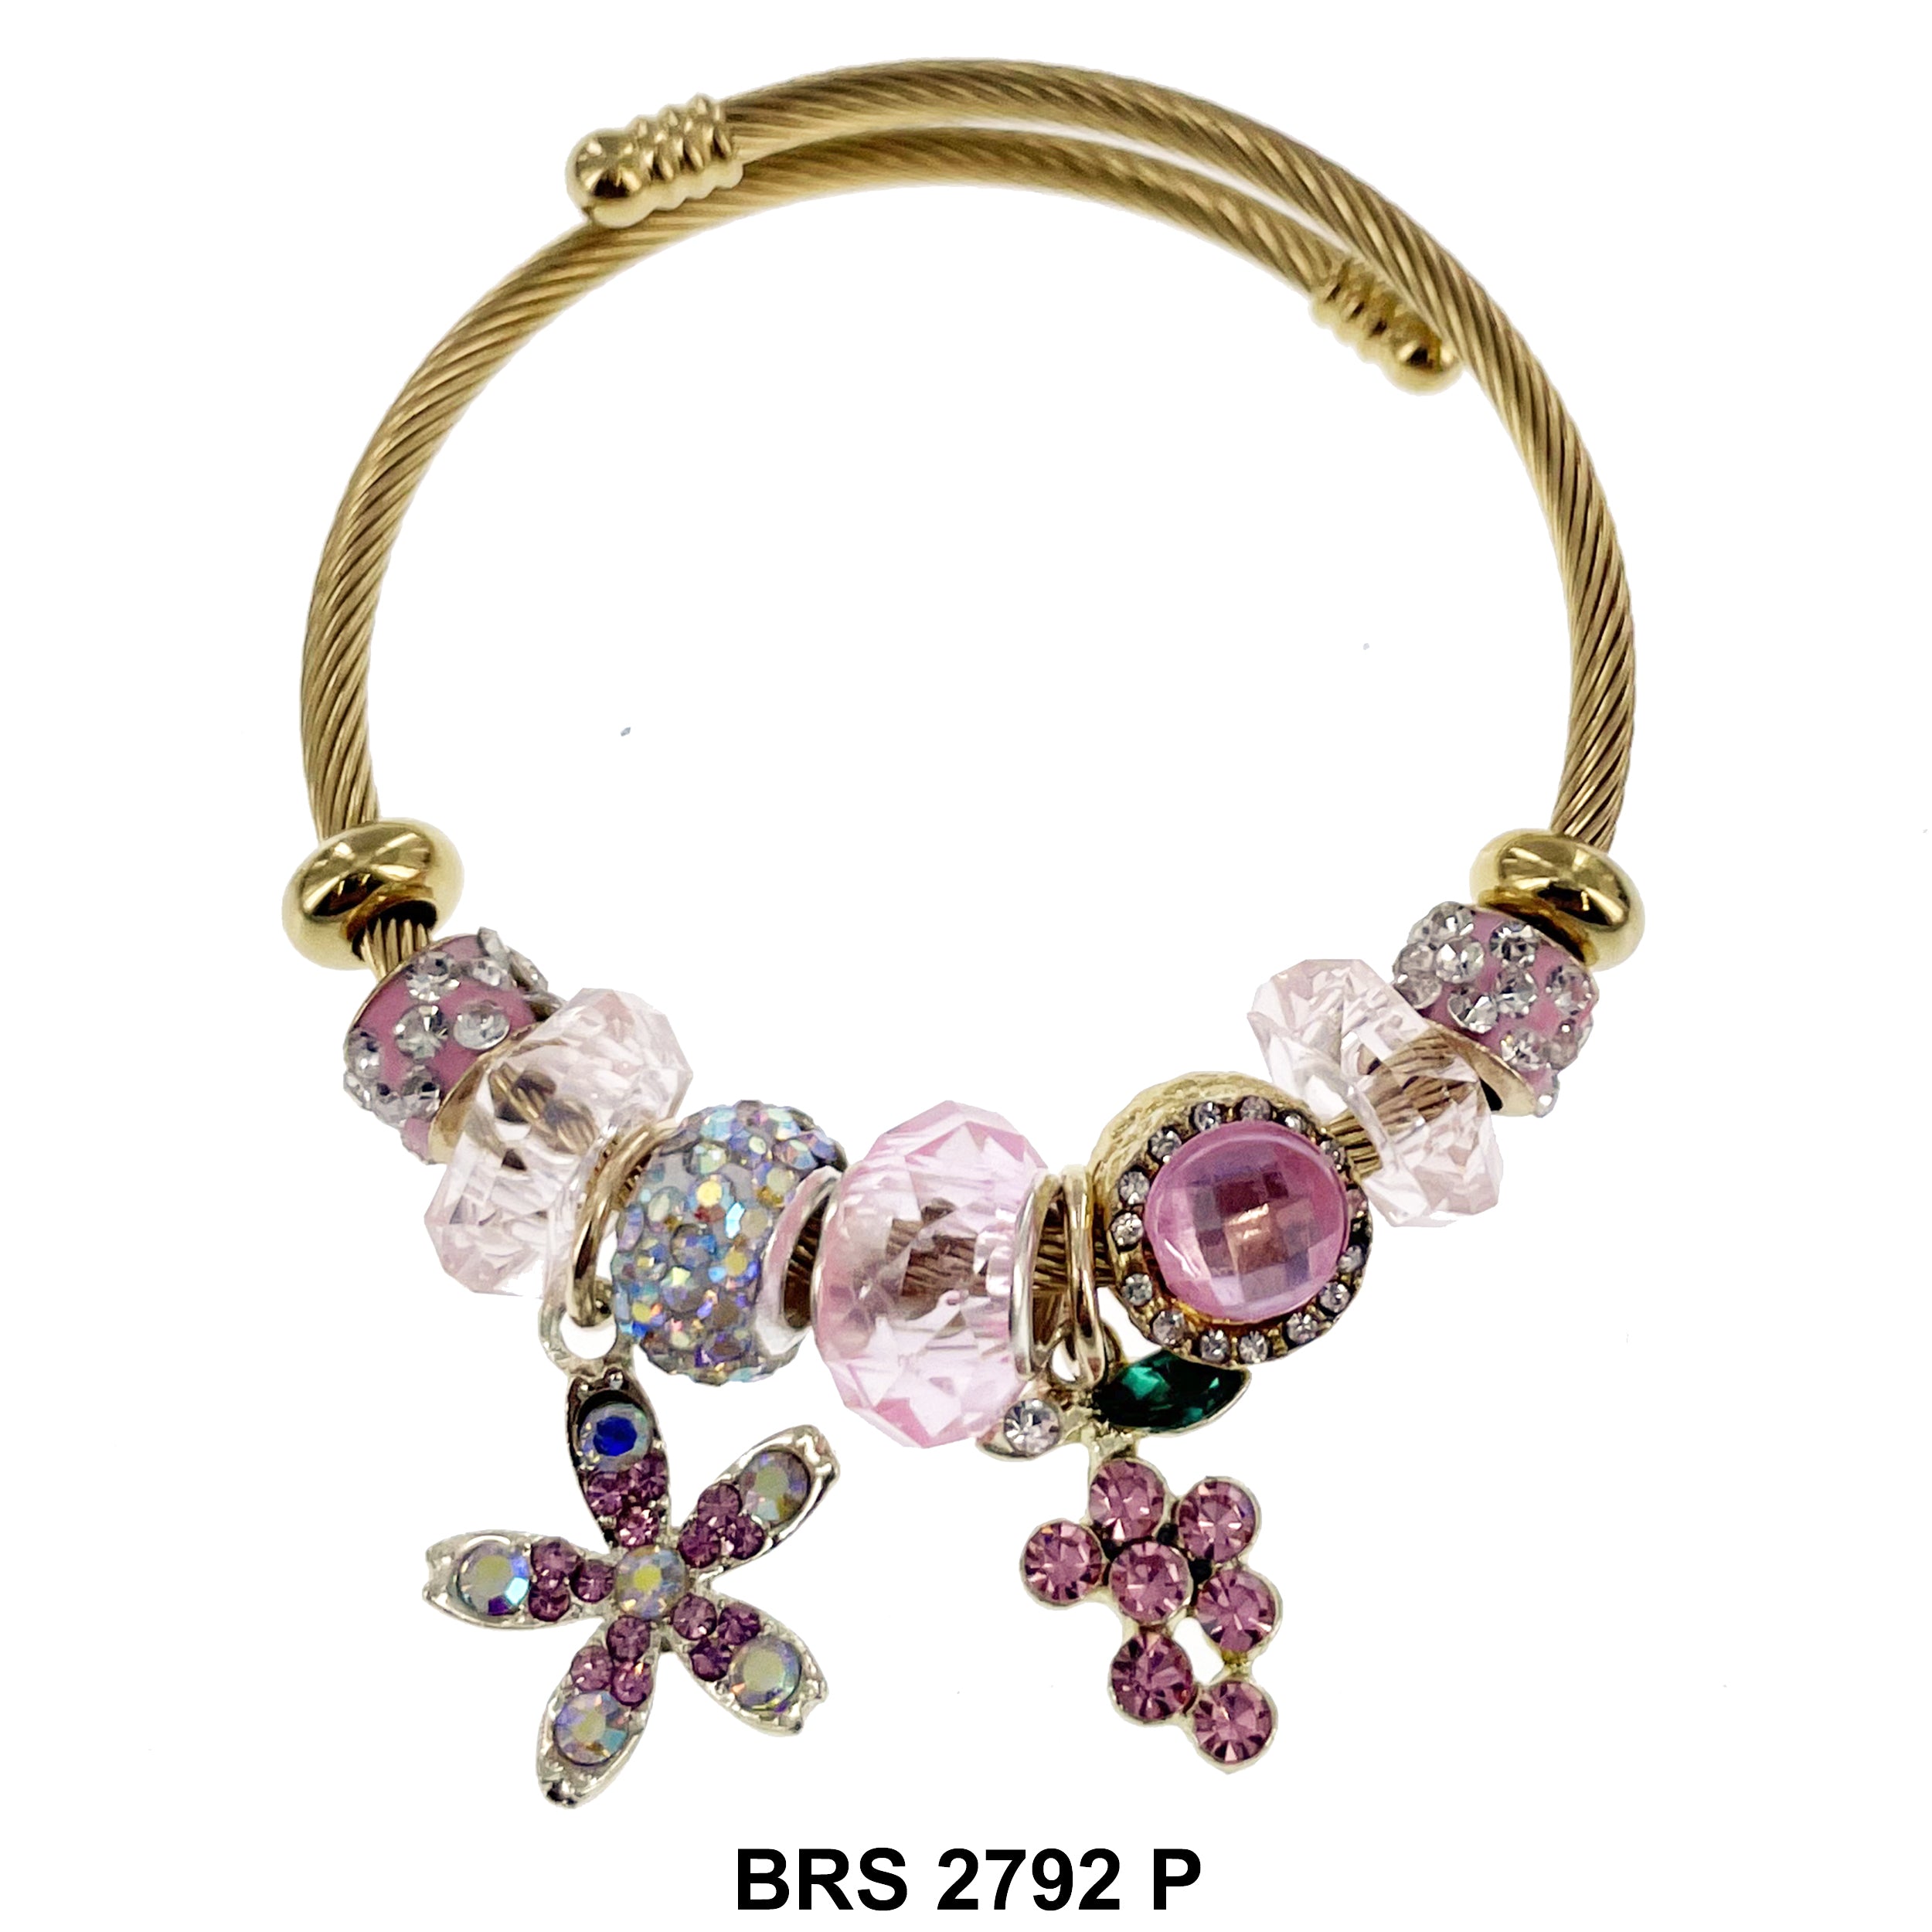 Hanging Charm Bracelet BRS 2792 P